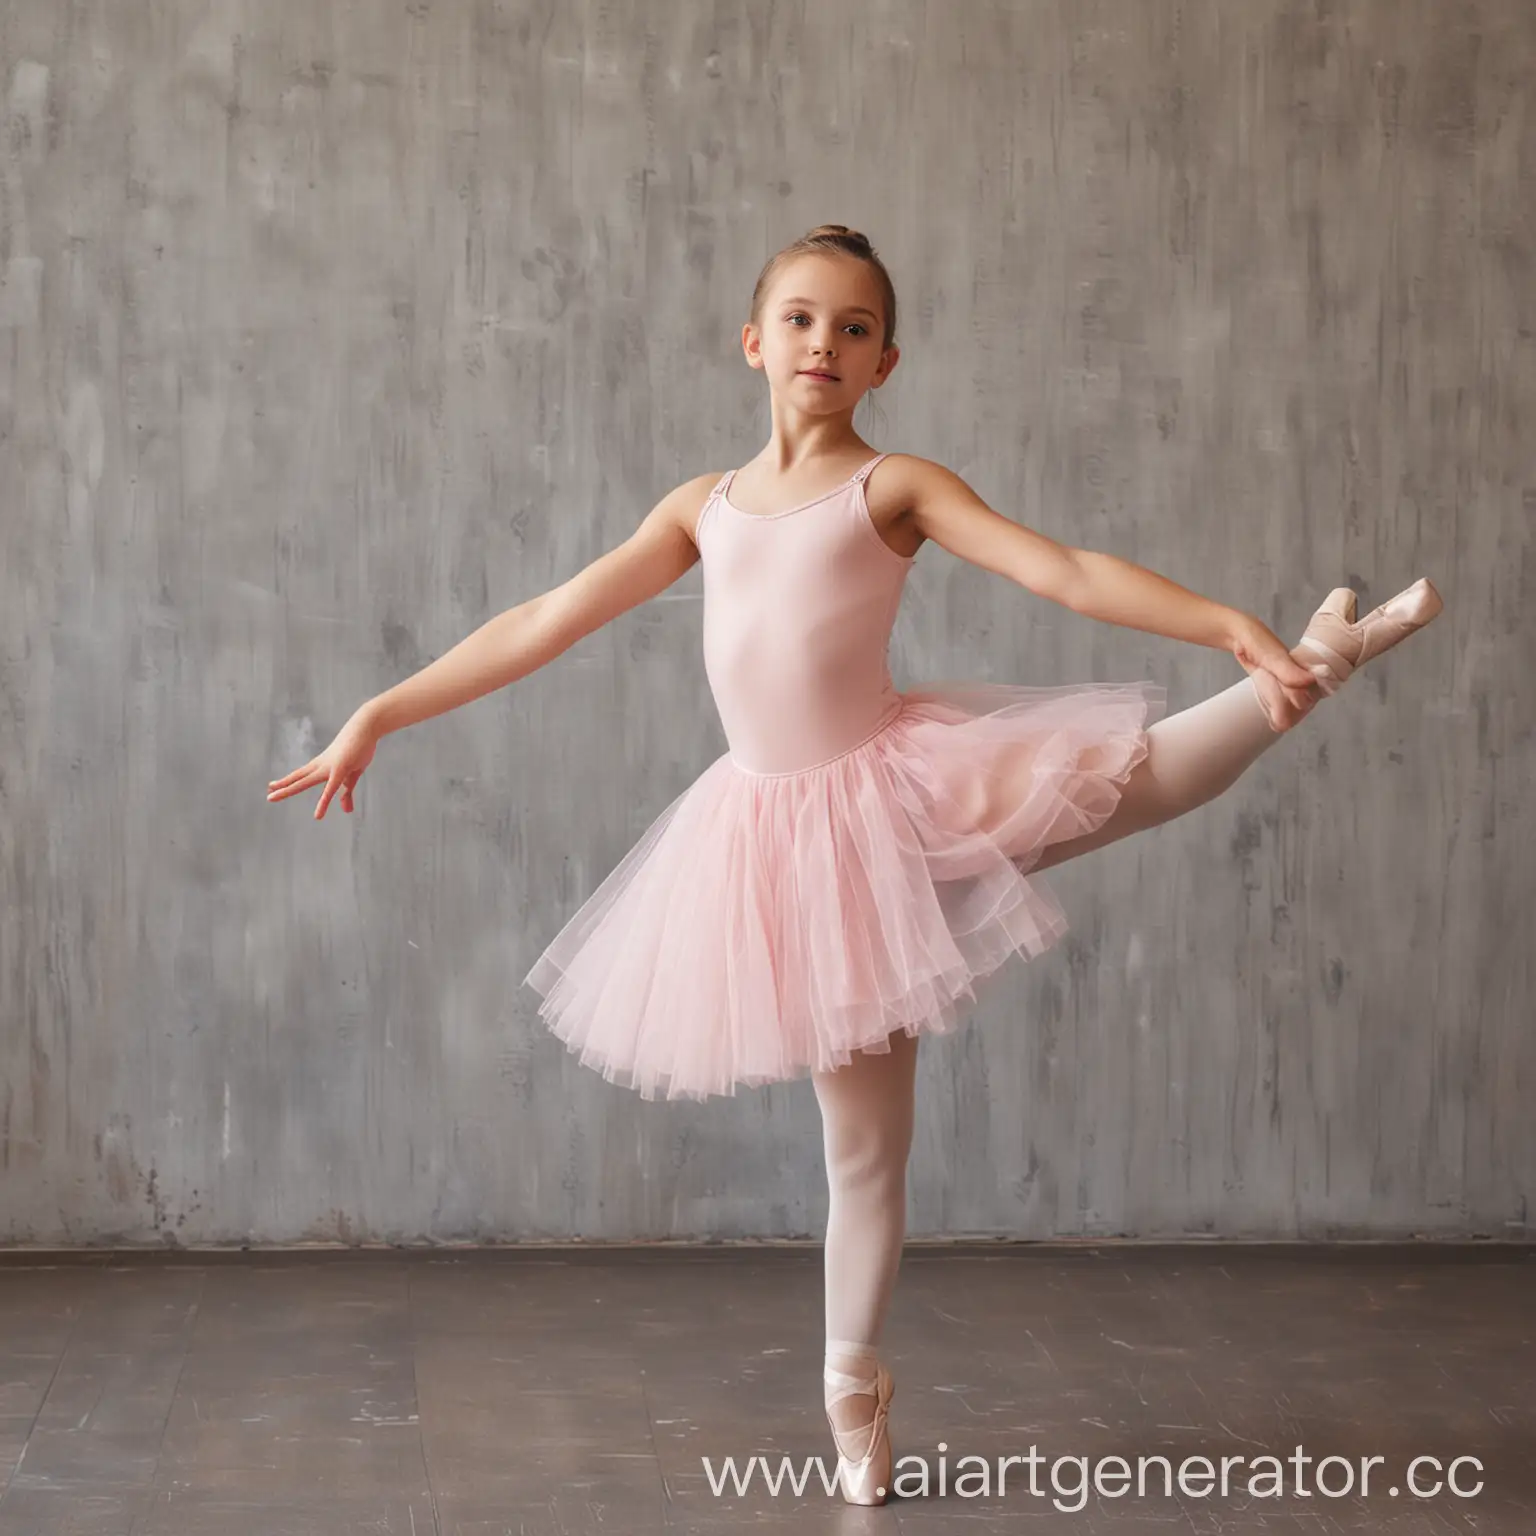 Красивая девшка 9 лет танцует балет
